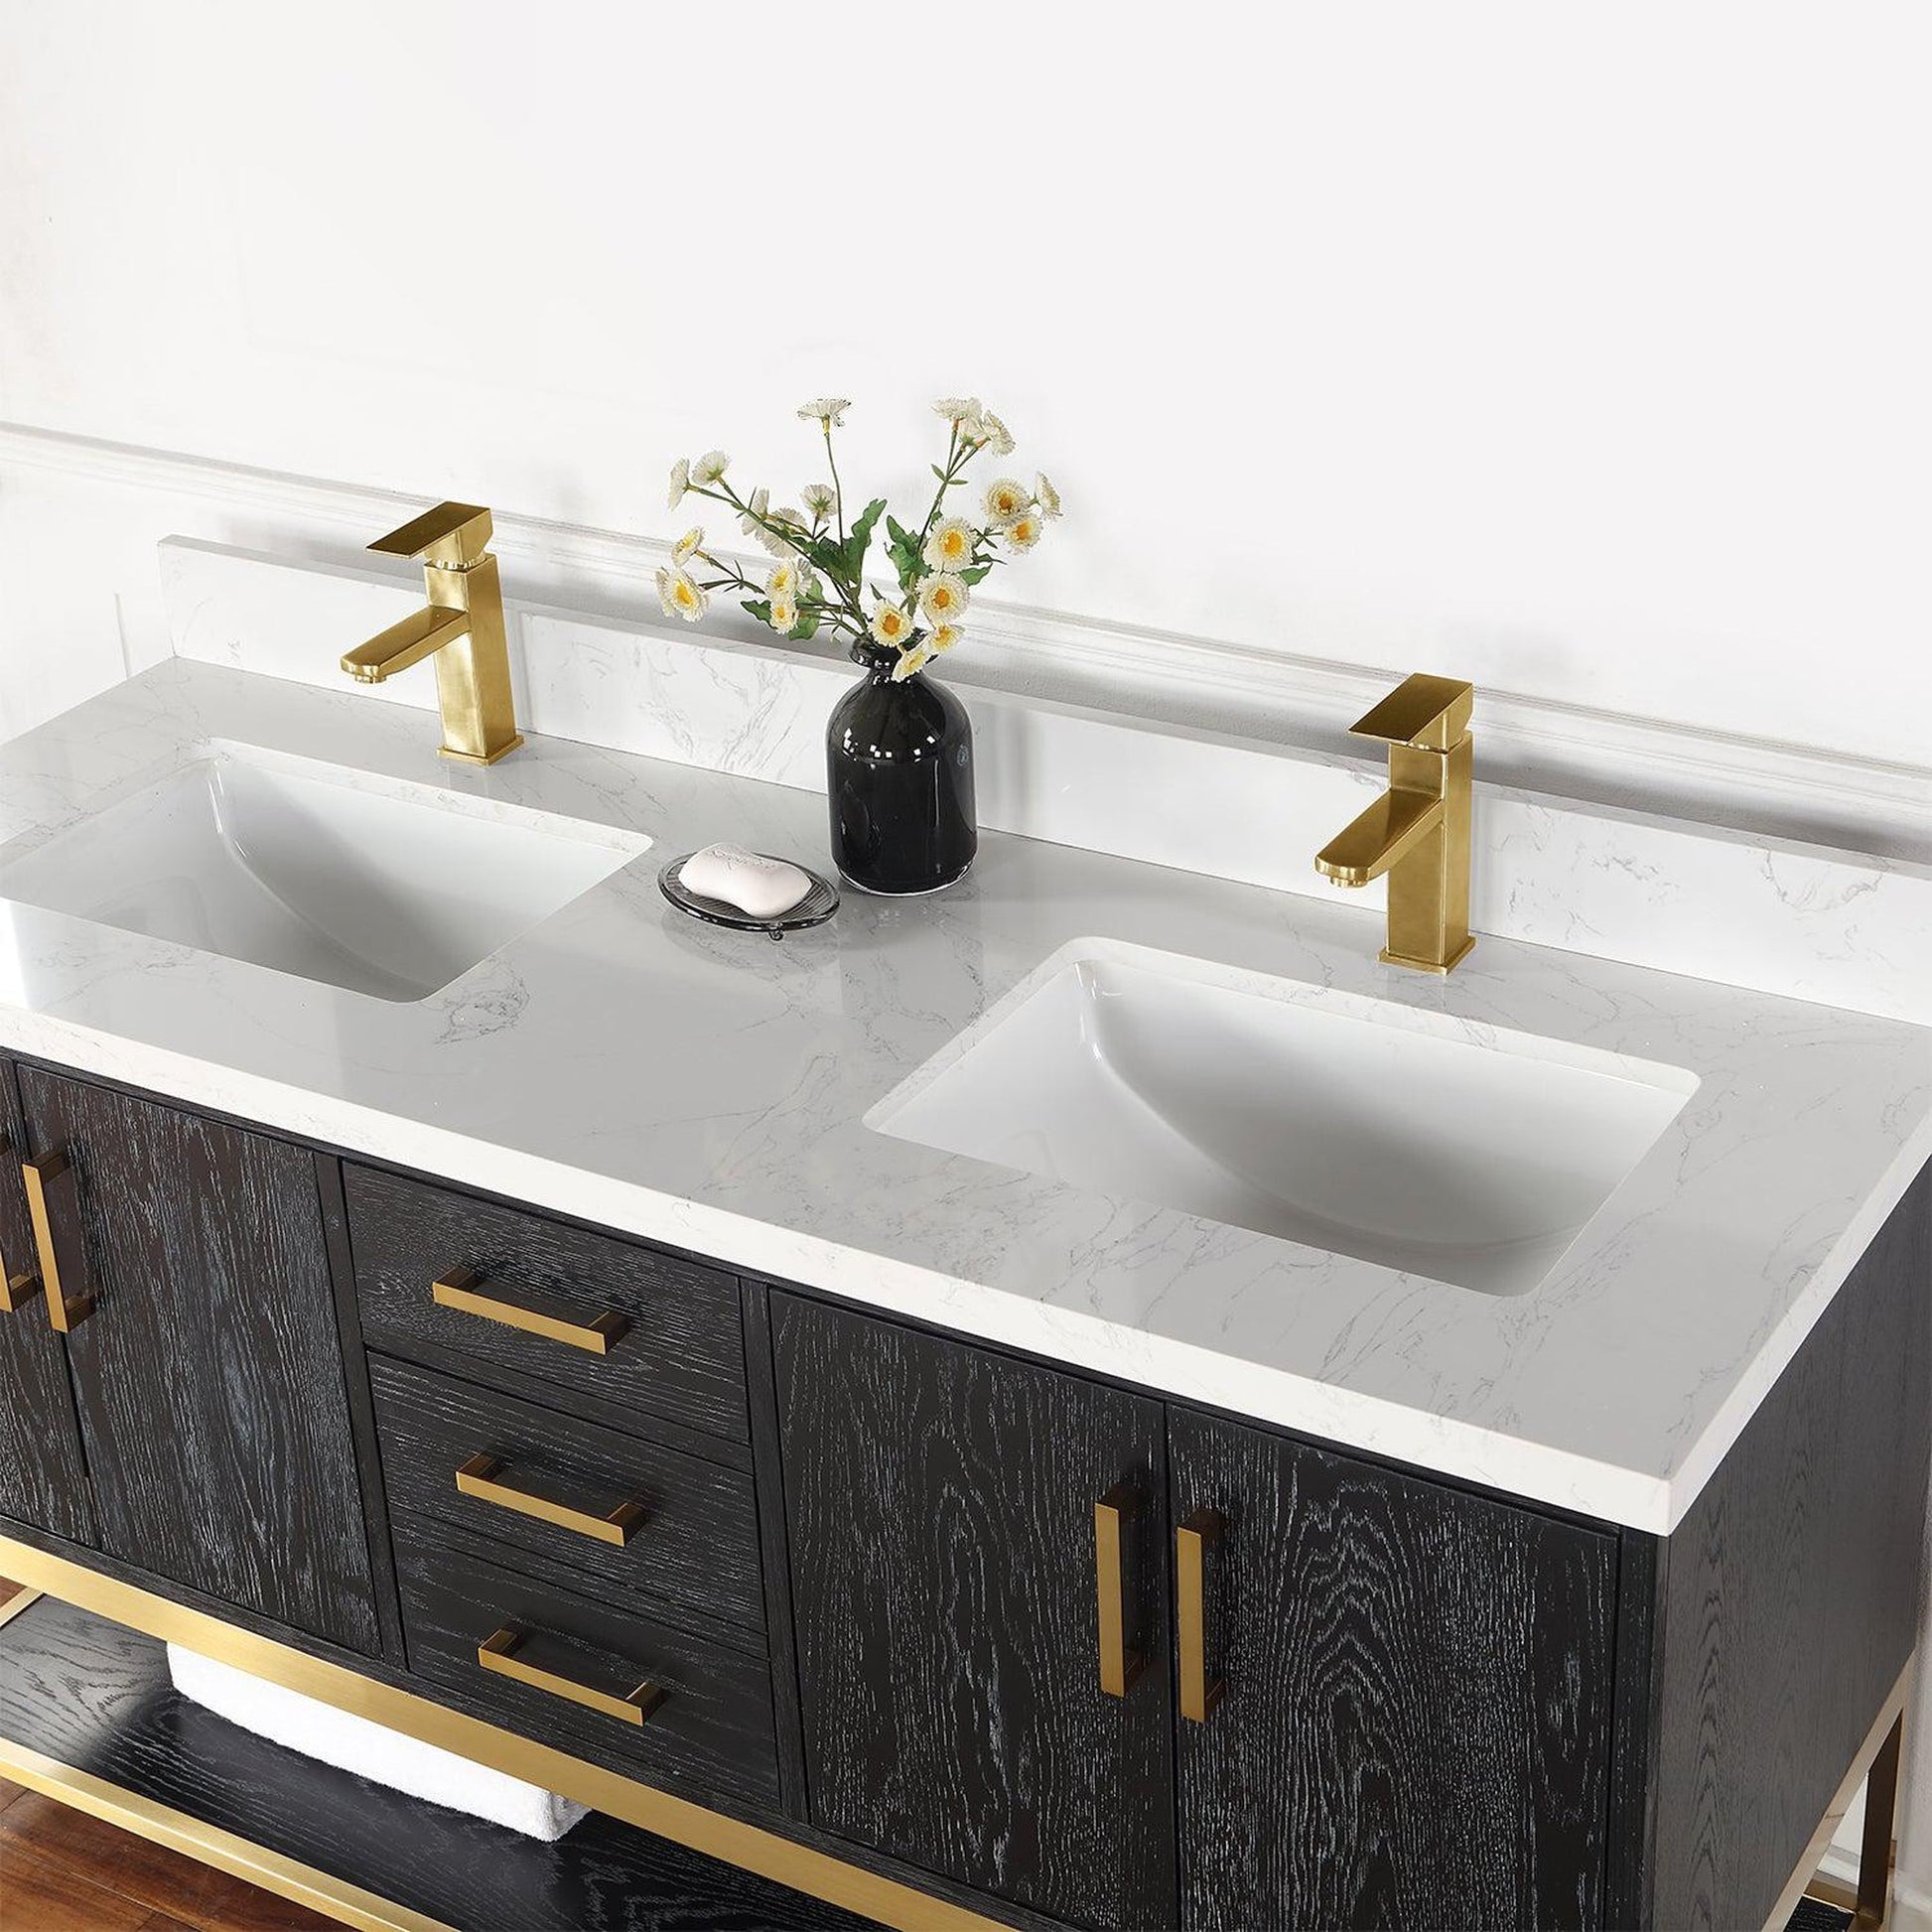 Altair Wildy 60" Black Oak Freestanding Double Bathroom Vanity Set With Stylish Composite Grain White Stone Top, Two Rectangular Undermount Ceramic Sinks, Overflow, and Backsplash